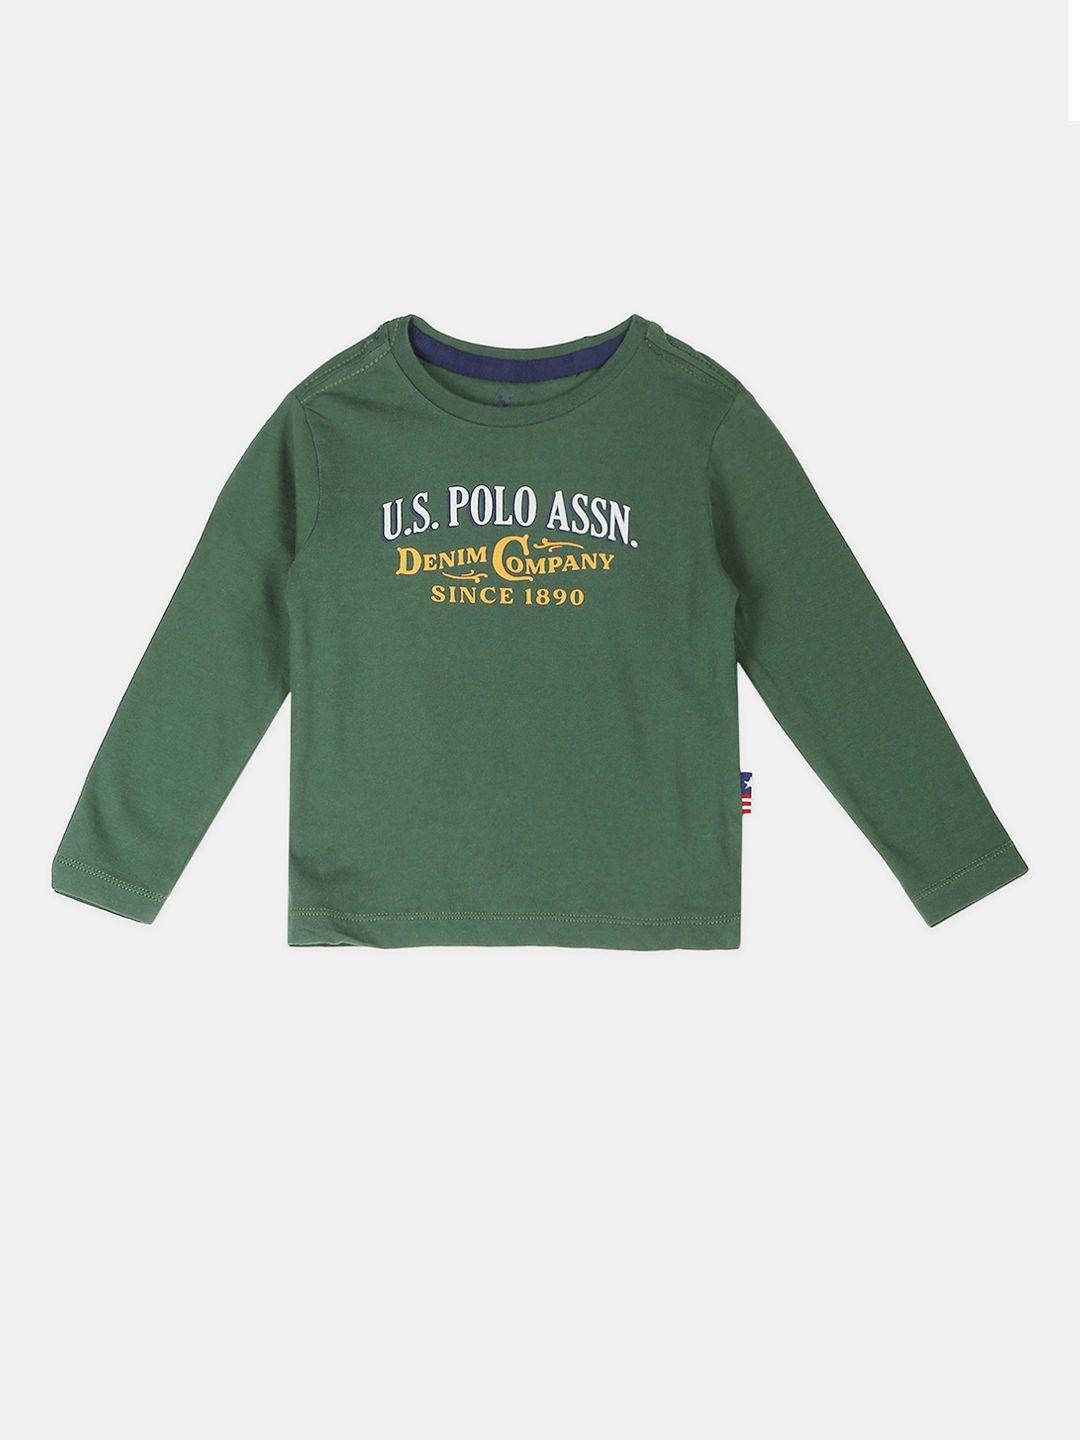 u.s. polo assn. kids boys green typography printed t-shirt